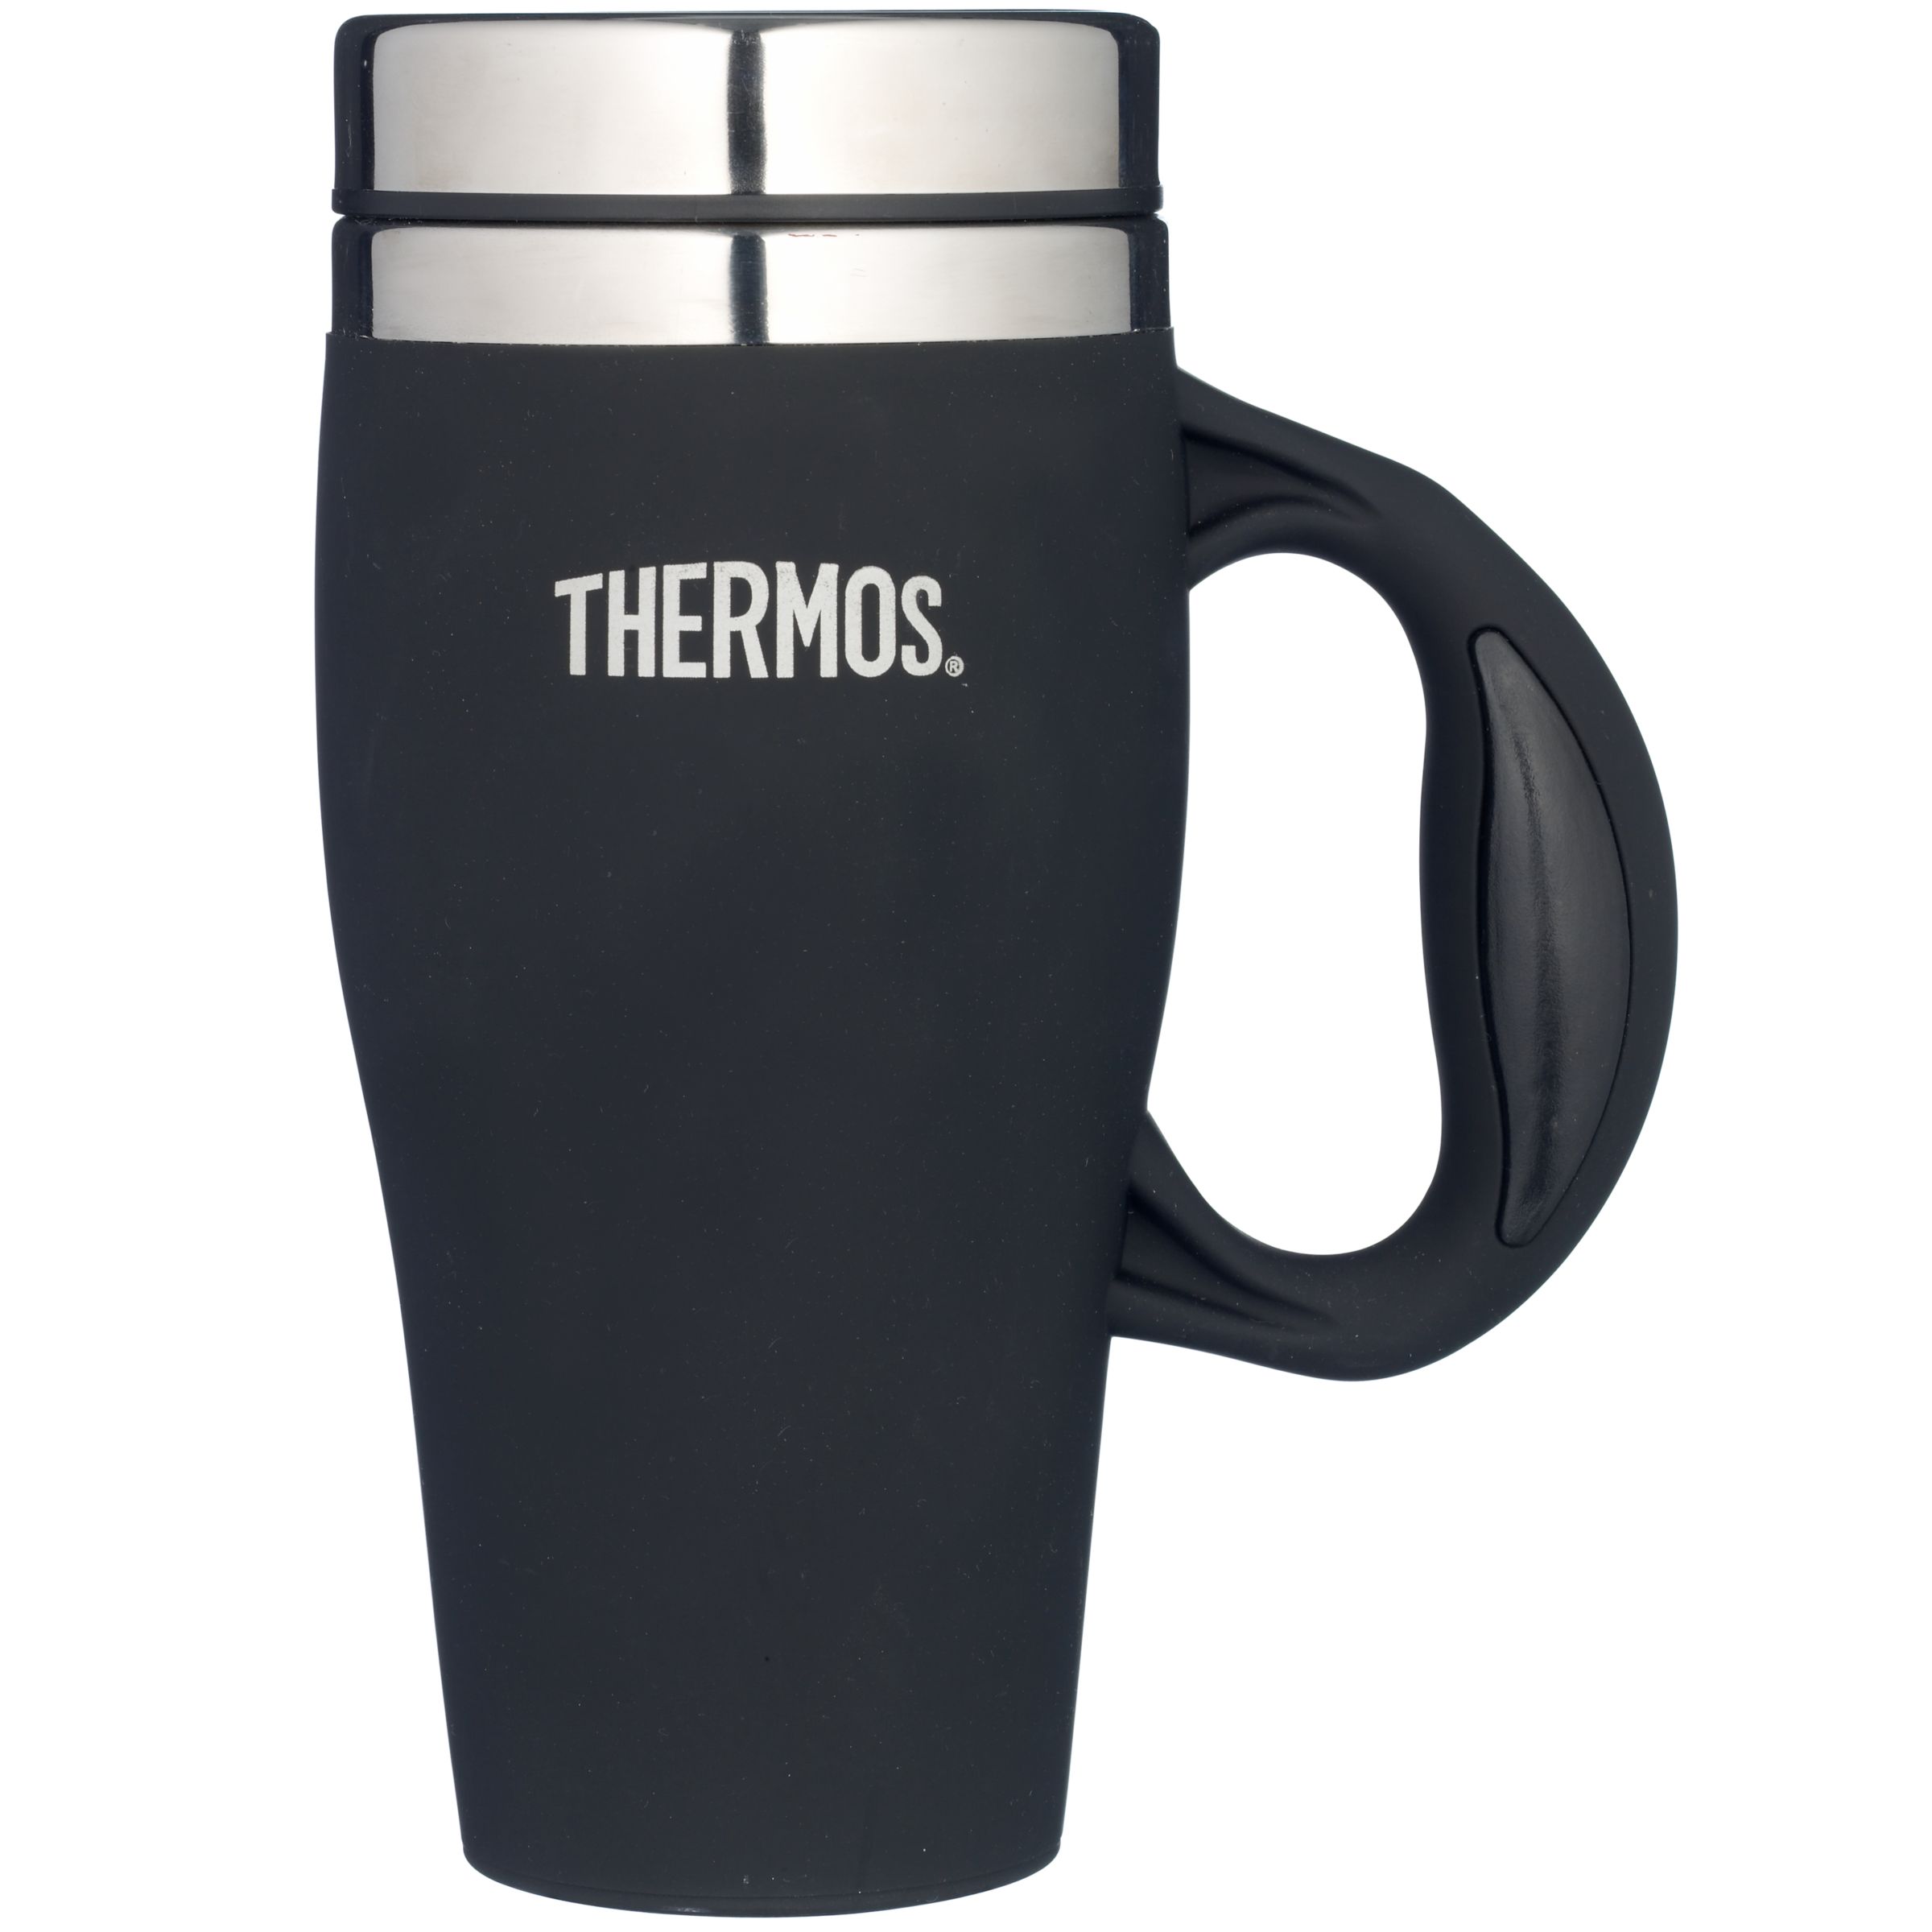 Thermos Travel Mug, Black